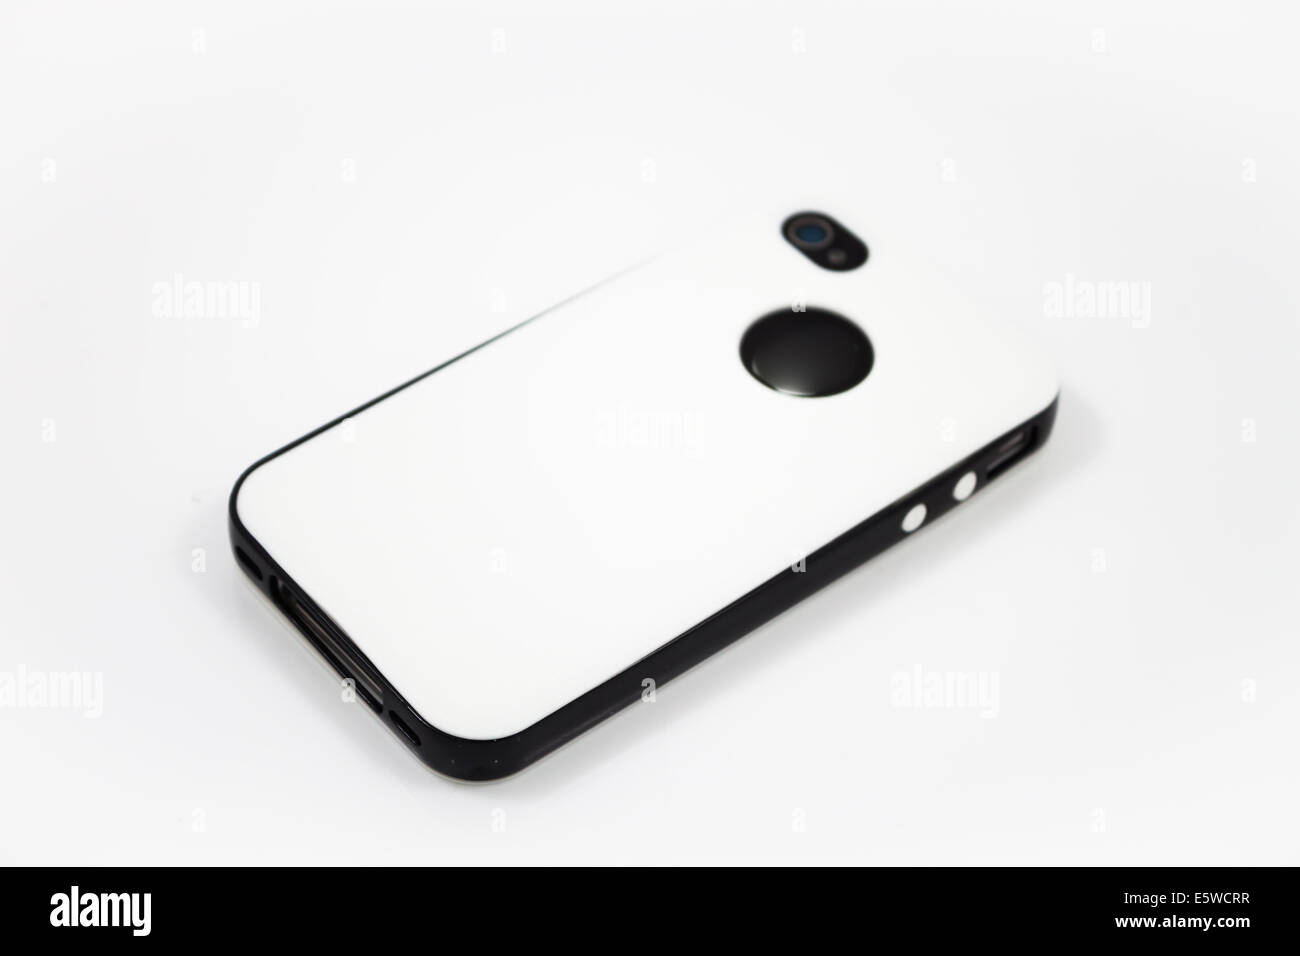 Smartphone with white case isolated on white background, stock photo Stock Photo